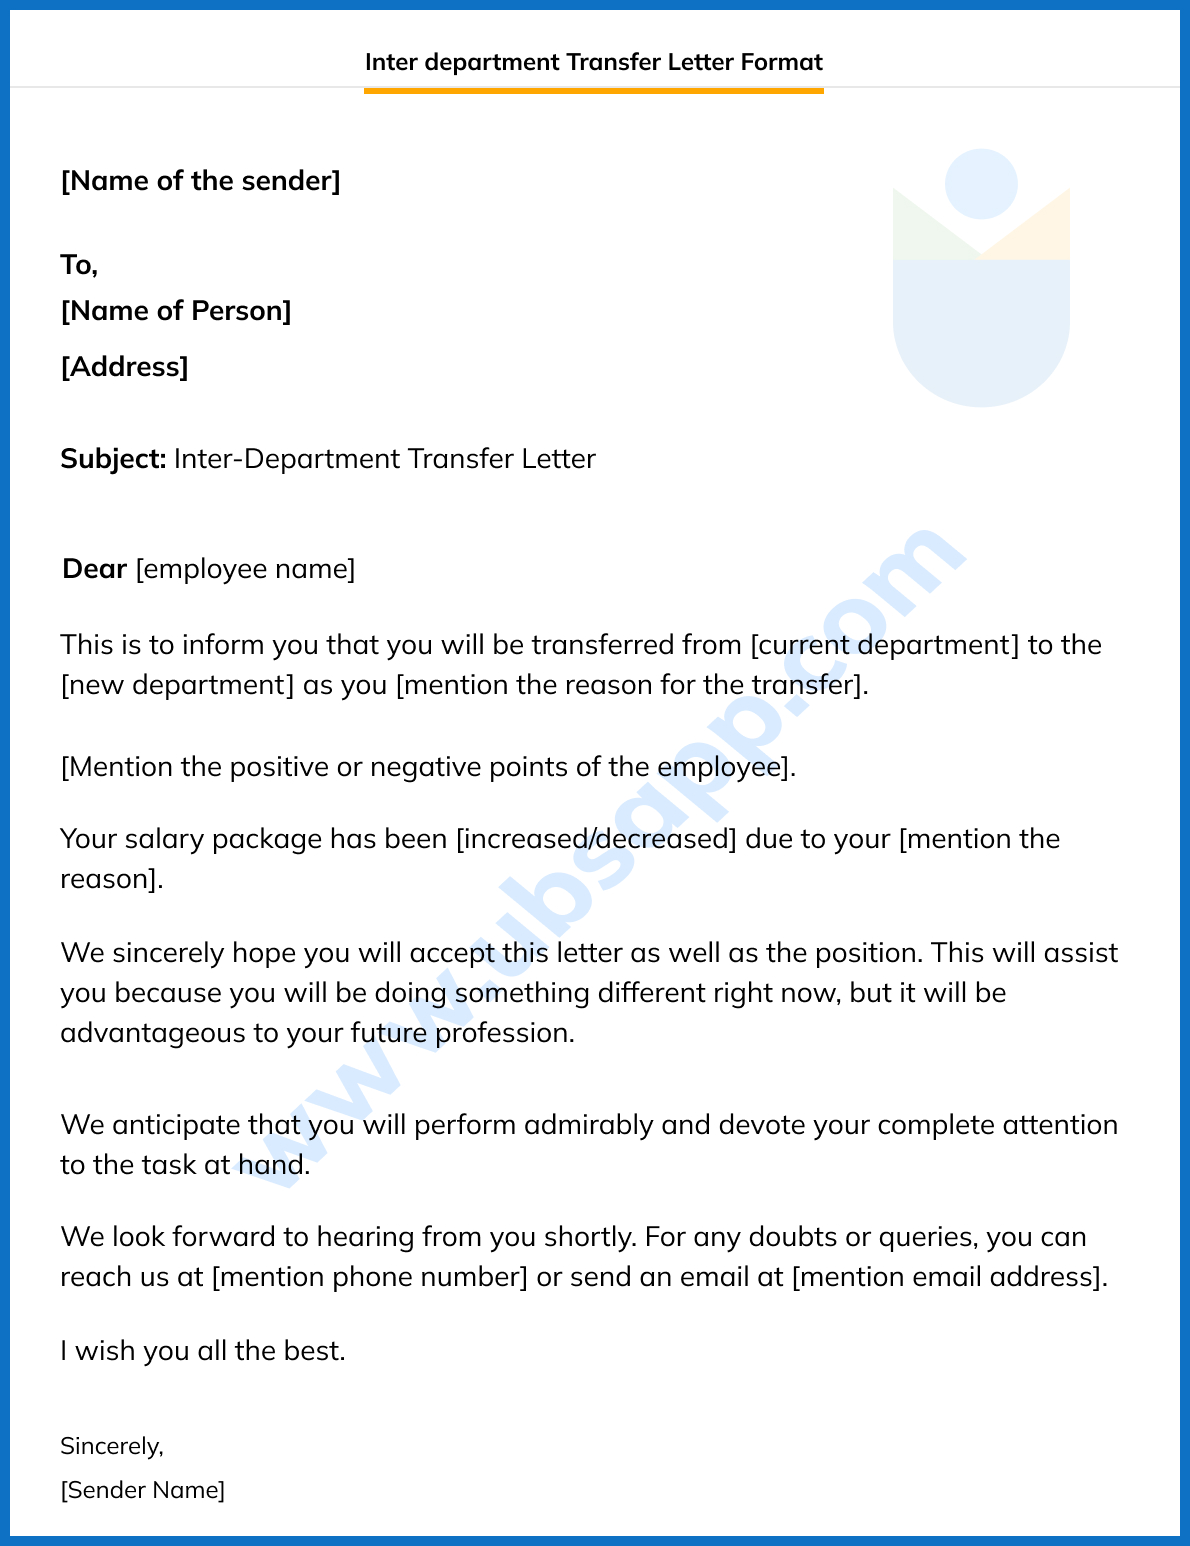 Inter department Transfer Letter Format